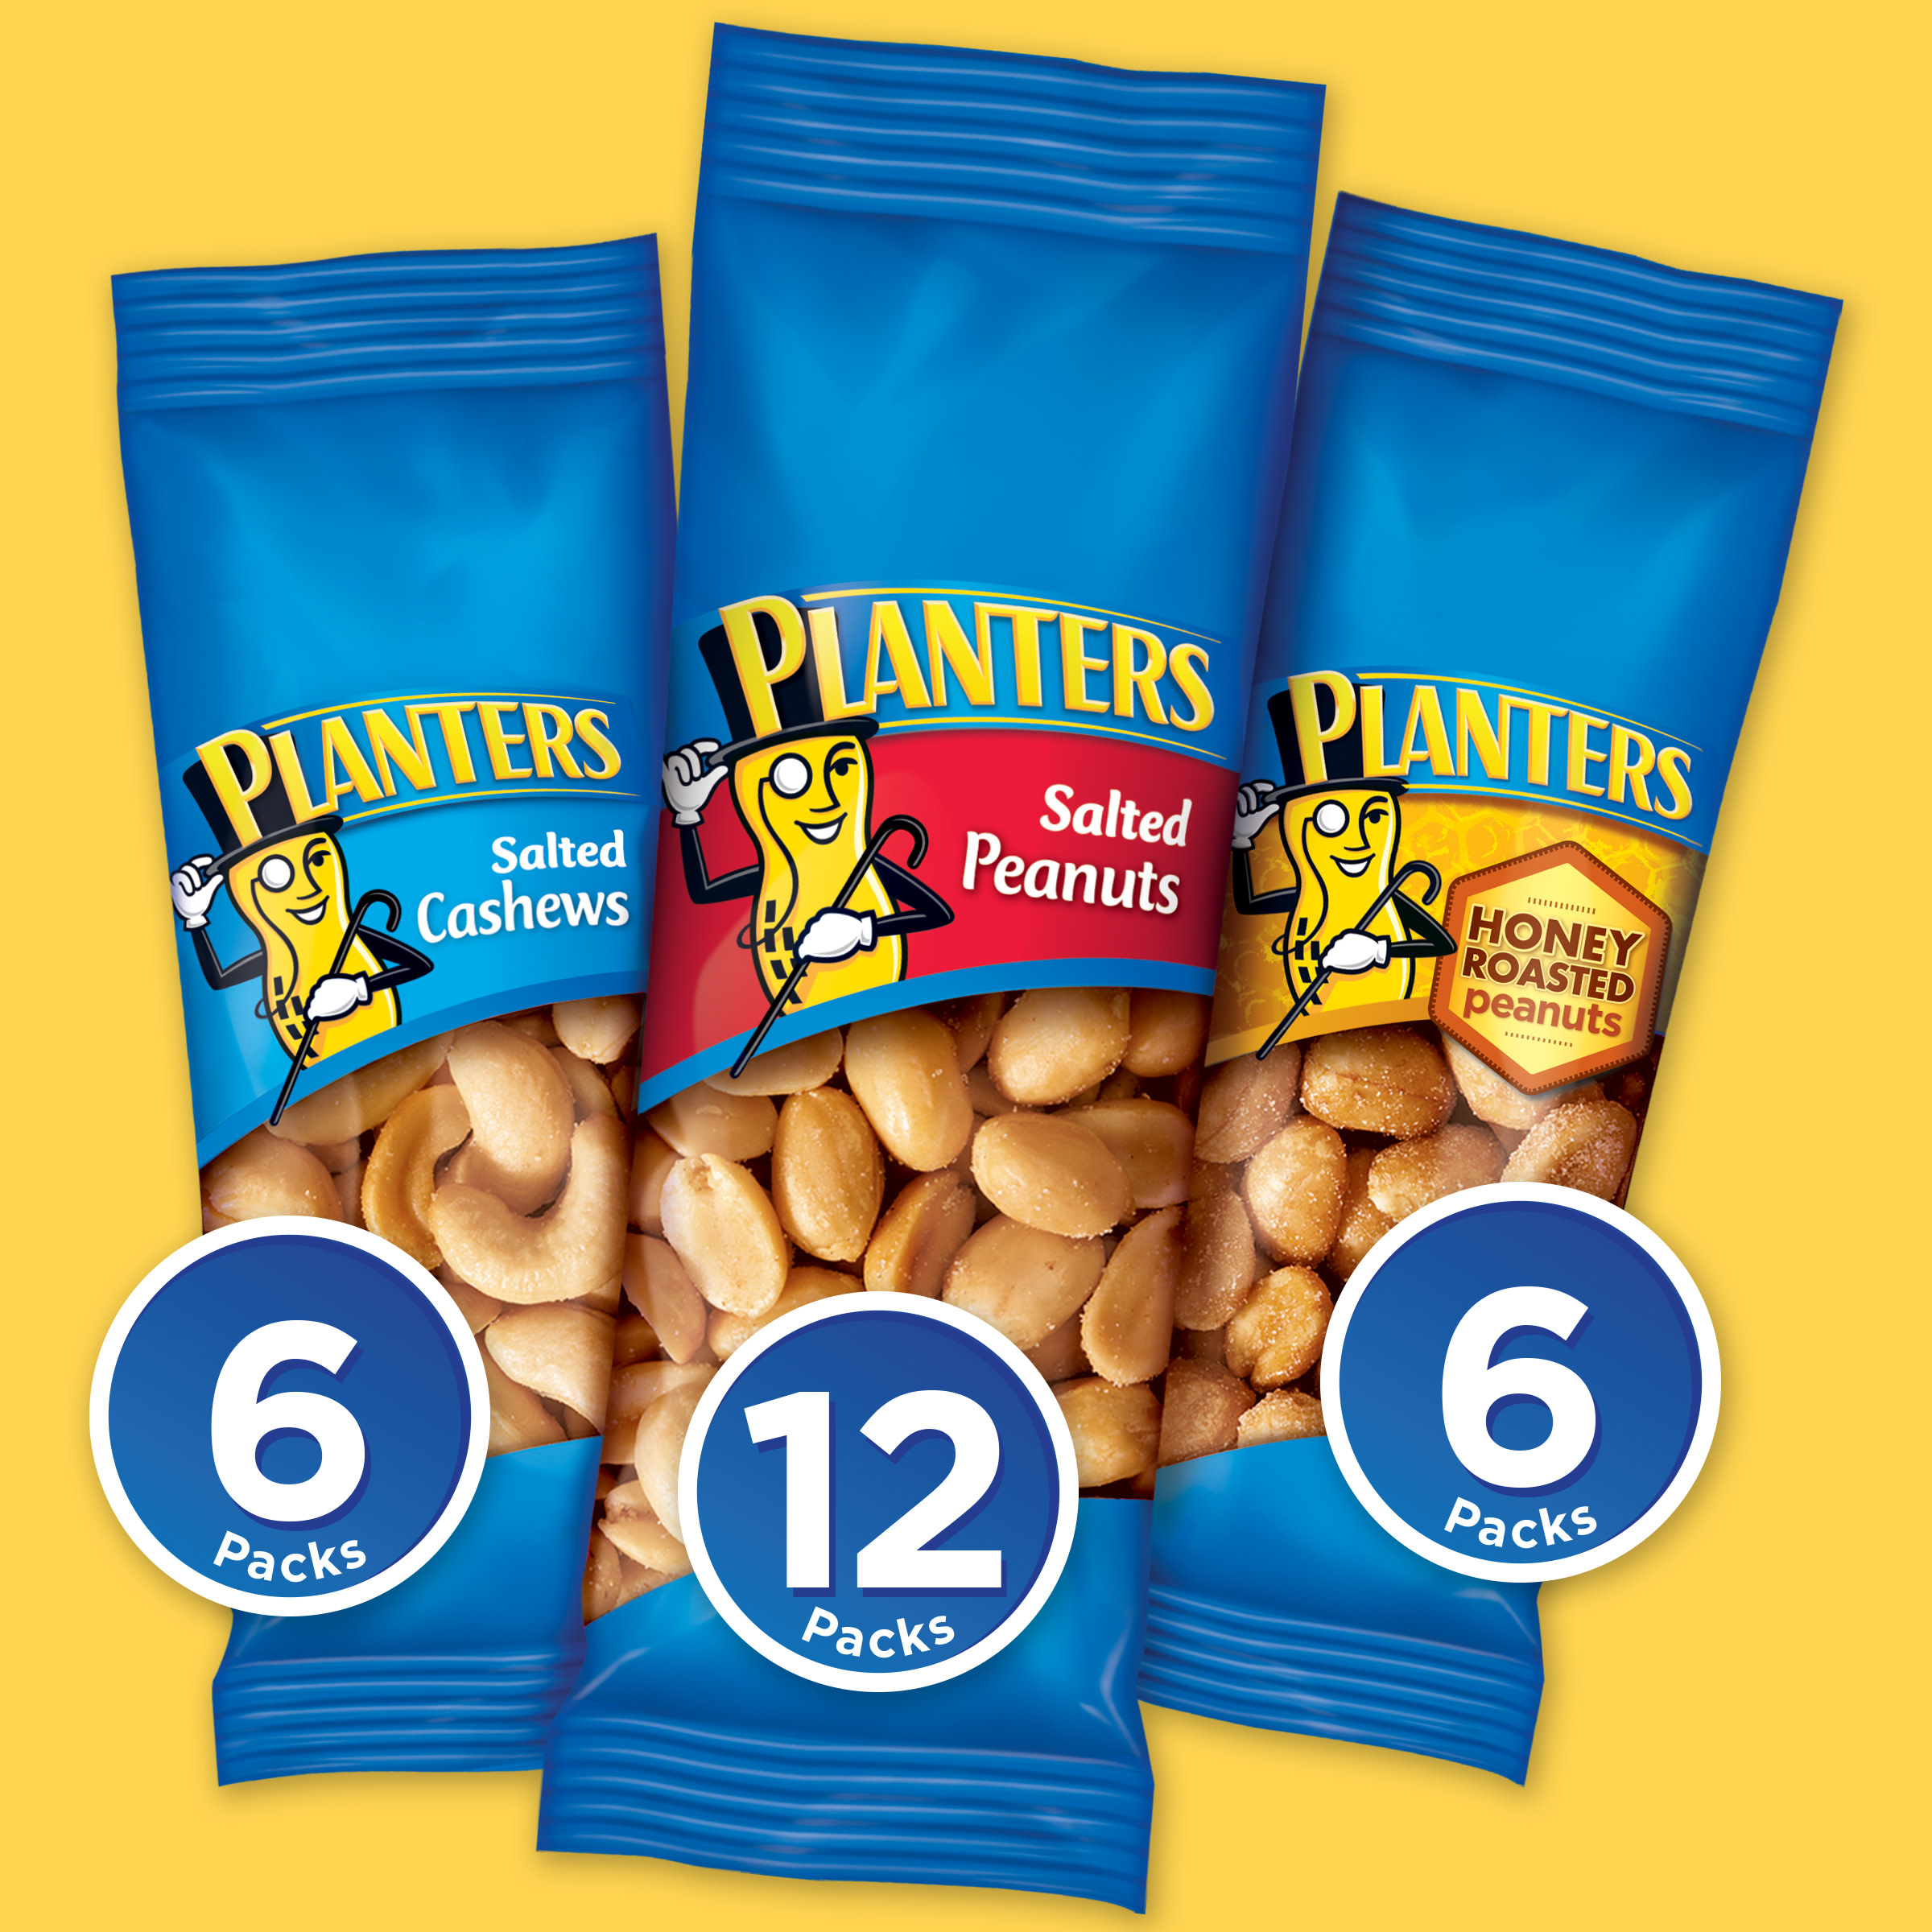 Planters Salted Cashews, Salted Peanuts & Honey Roasted Peanuts Variety Pack, 24 ct Packs - image 3 of 15